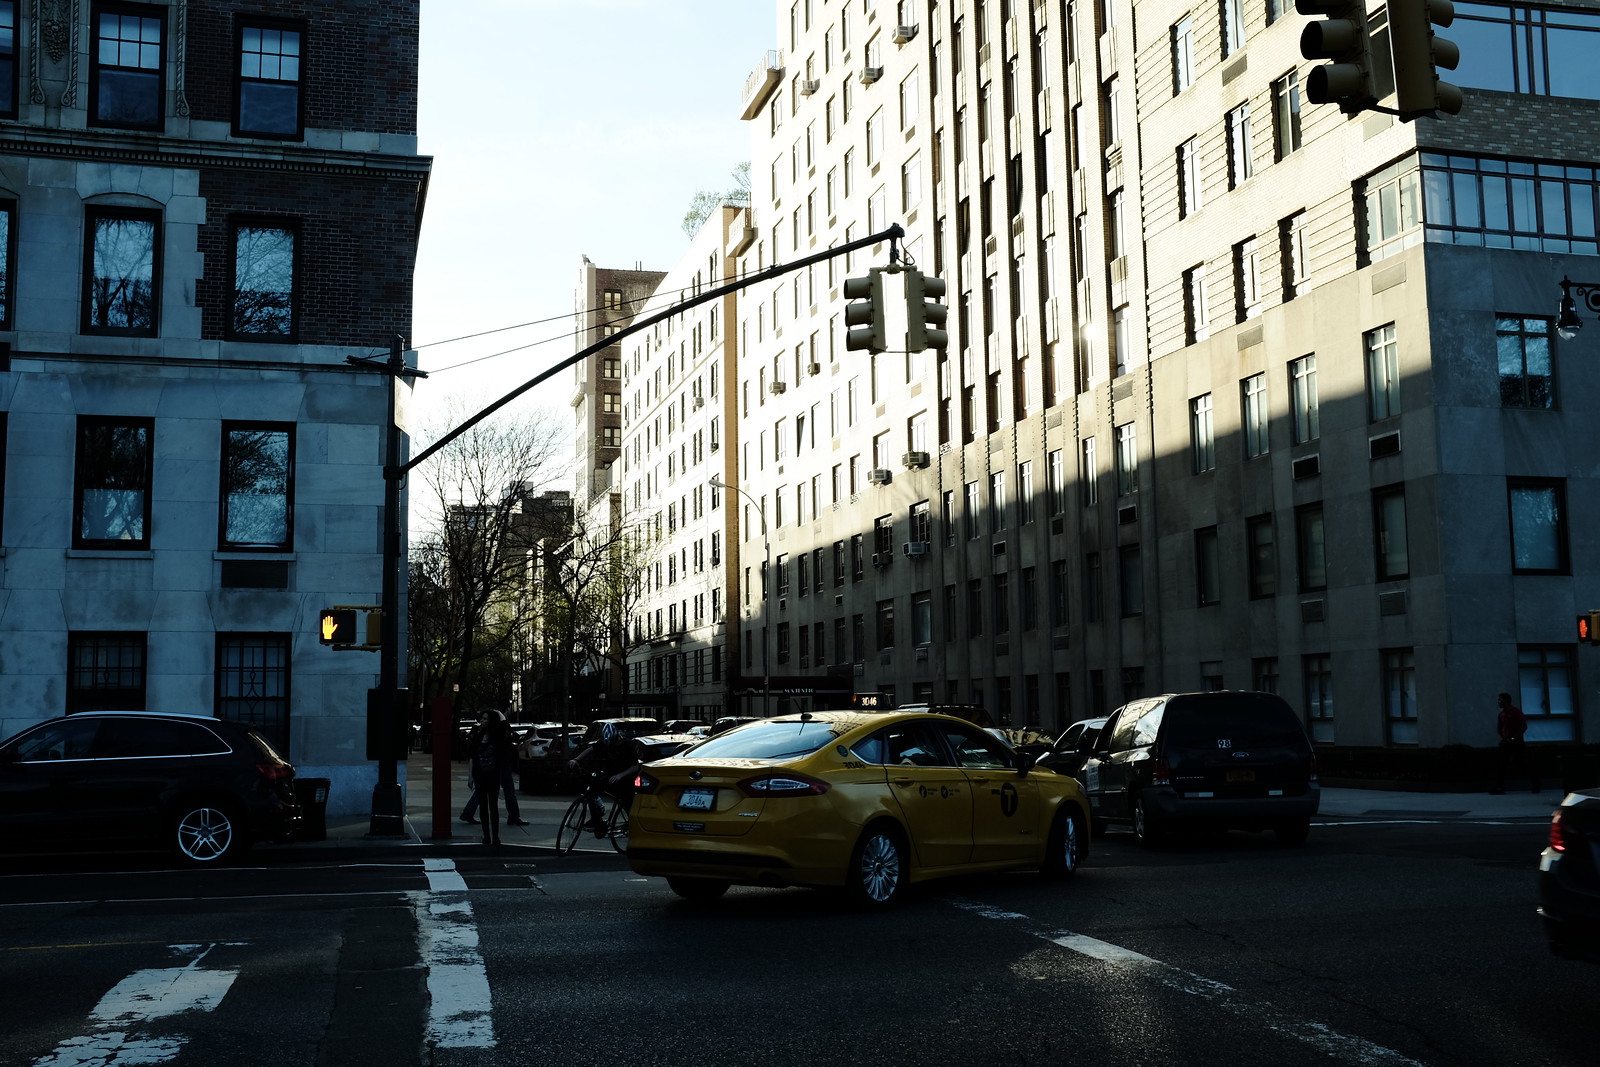 The New York Photo by FUJIFILM X100S.